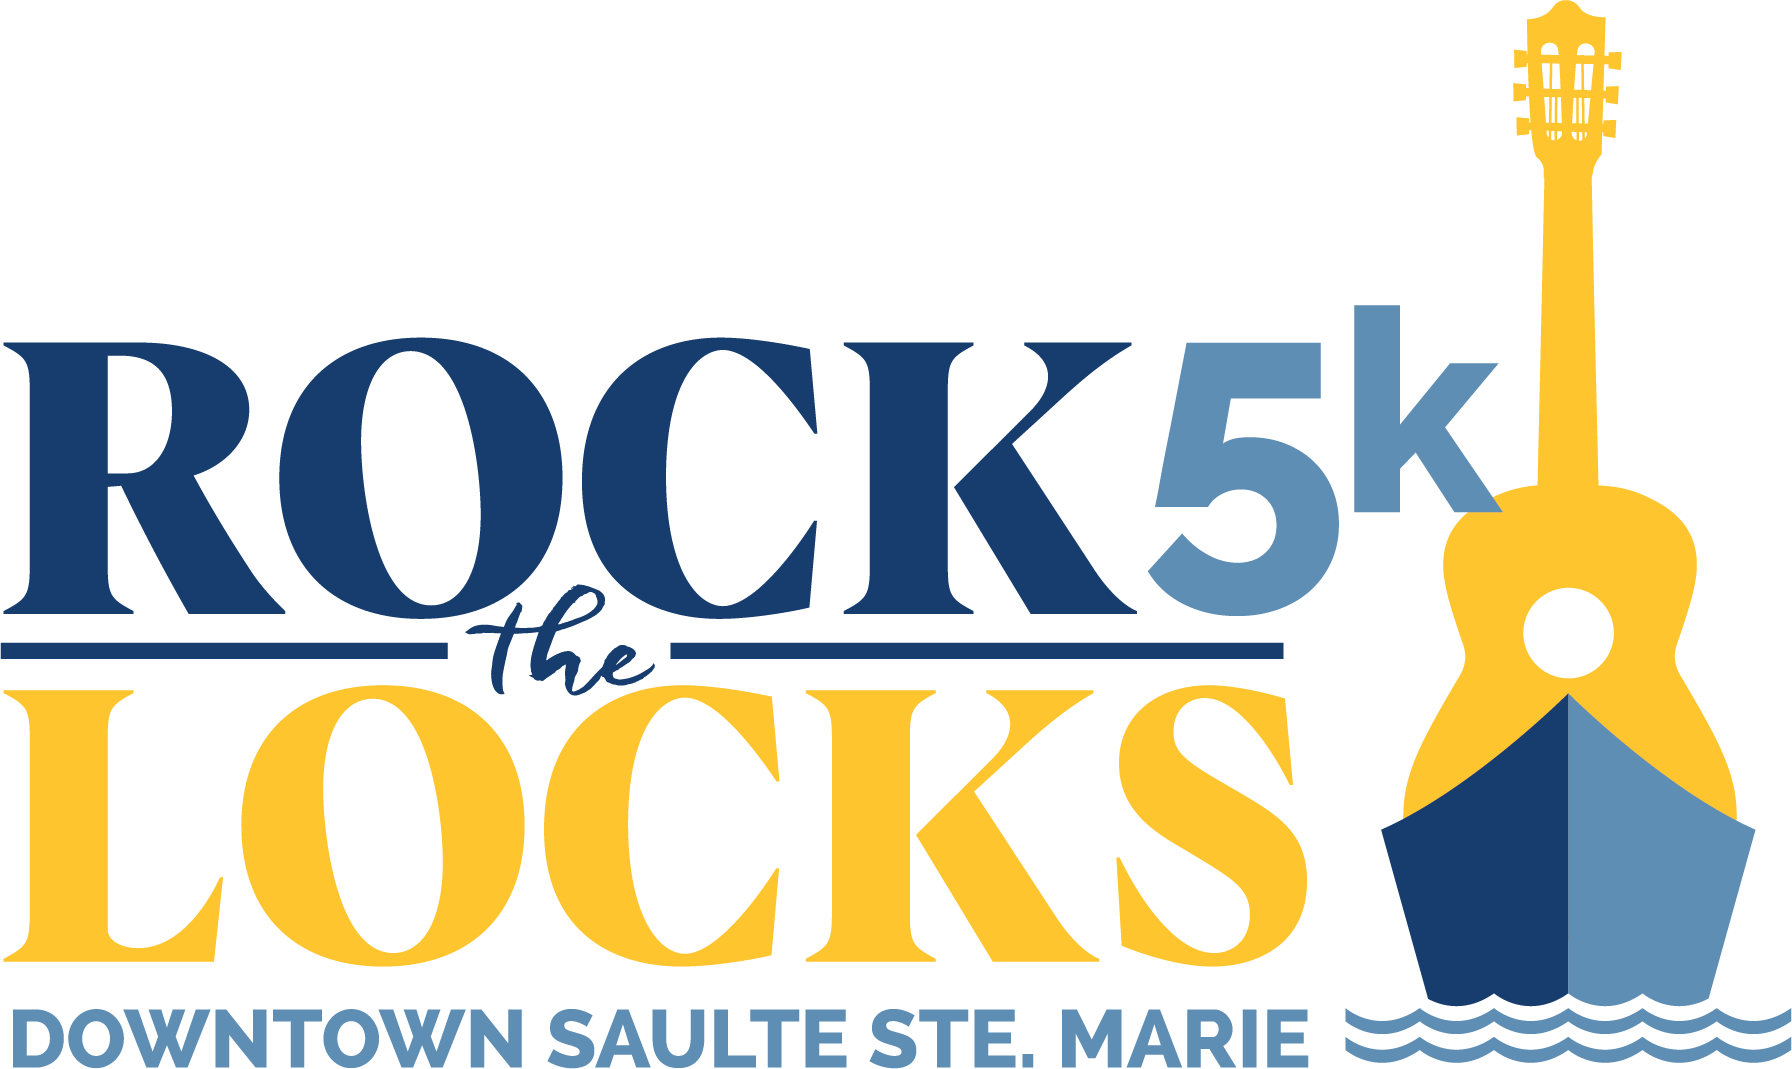 Rock the Locks 5K Race Downtown Sault Ste. Marie, Michigan!